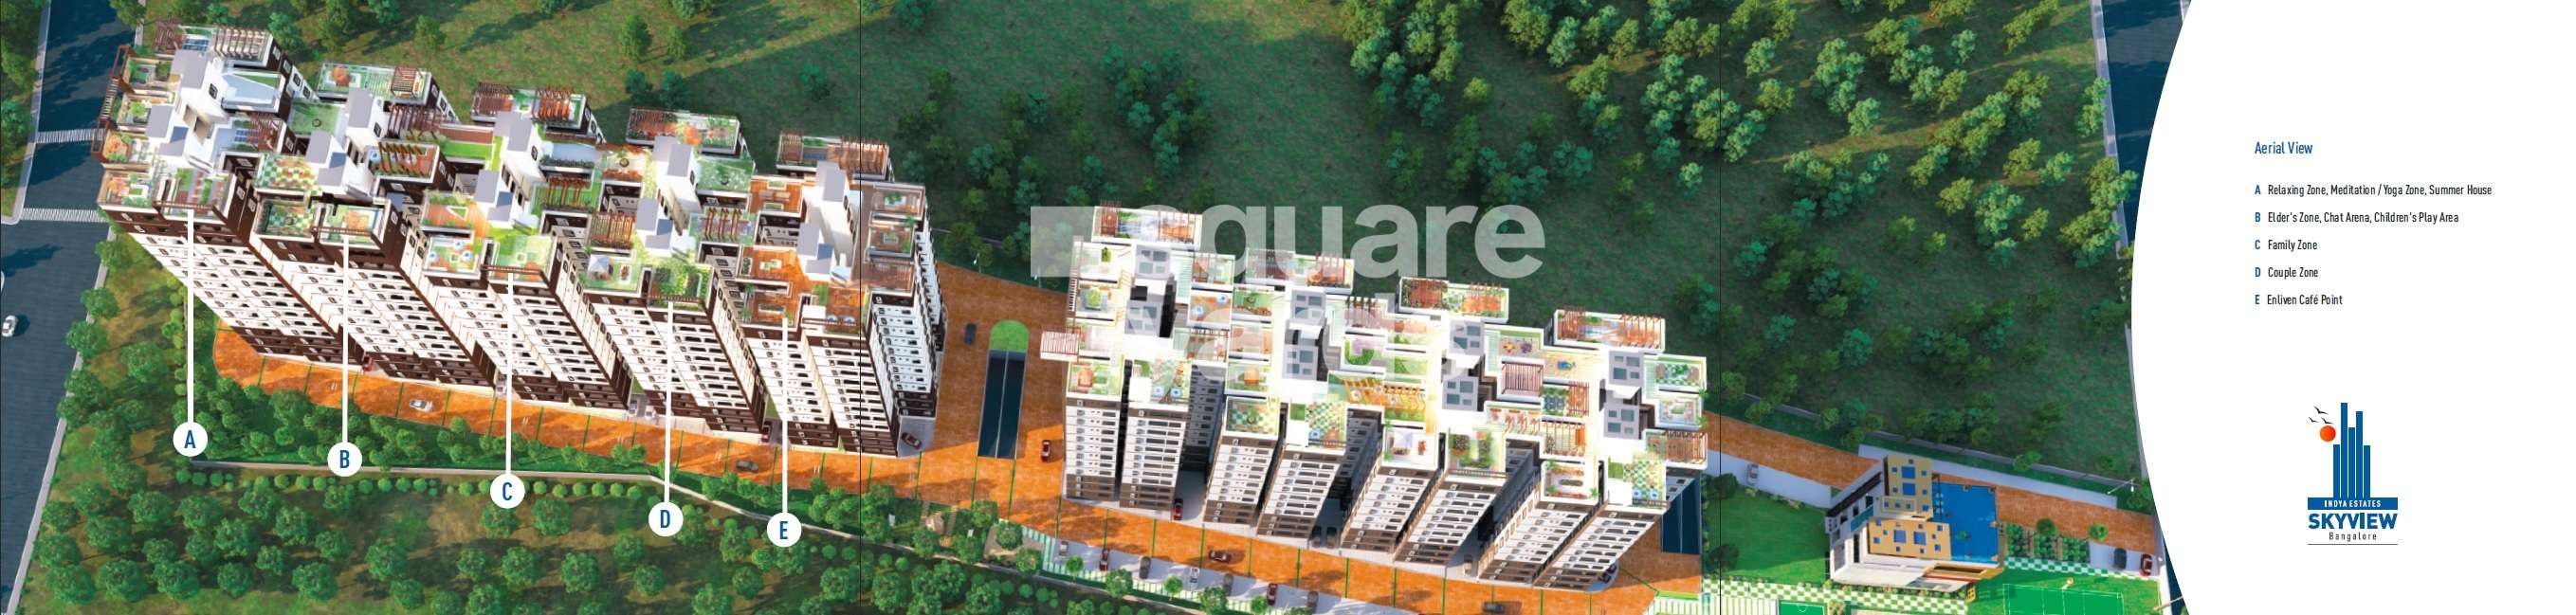 indya estates skyview project master plan image1 6264